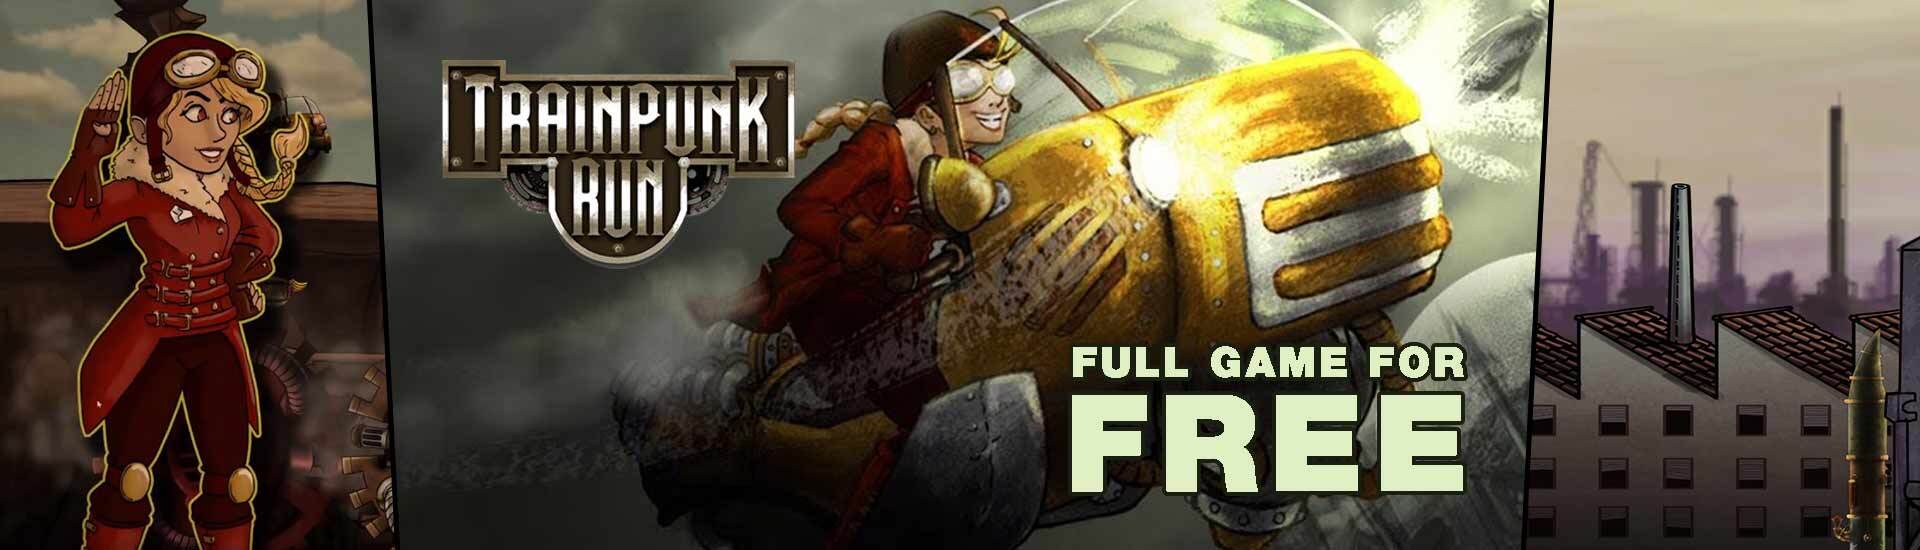 [indiegala-]-get-full-free-game-–-trainpunk-run